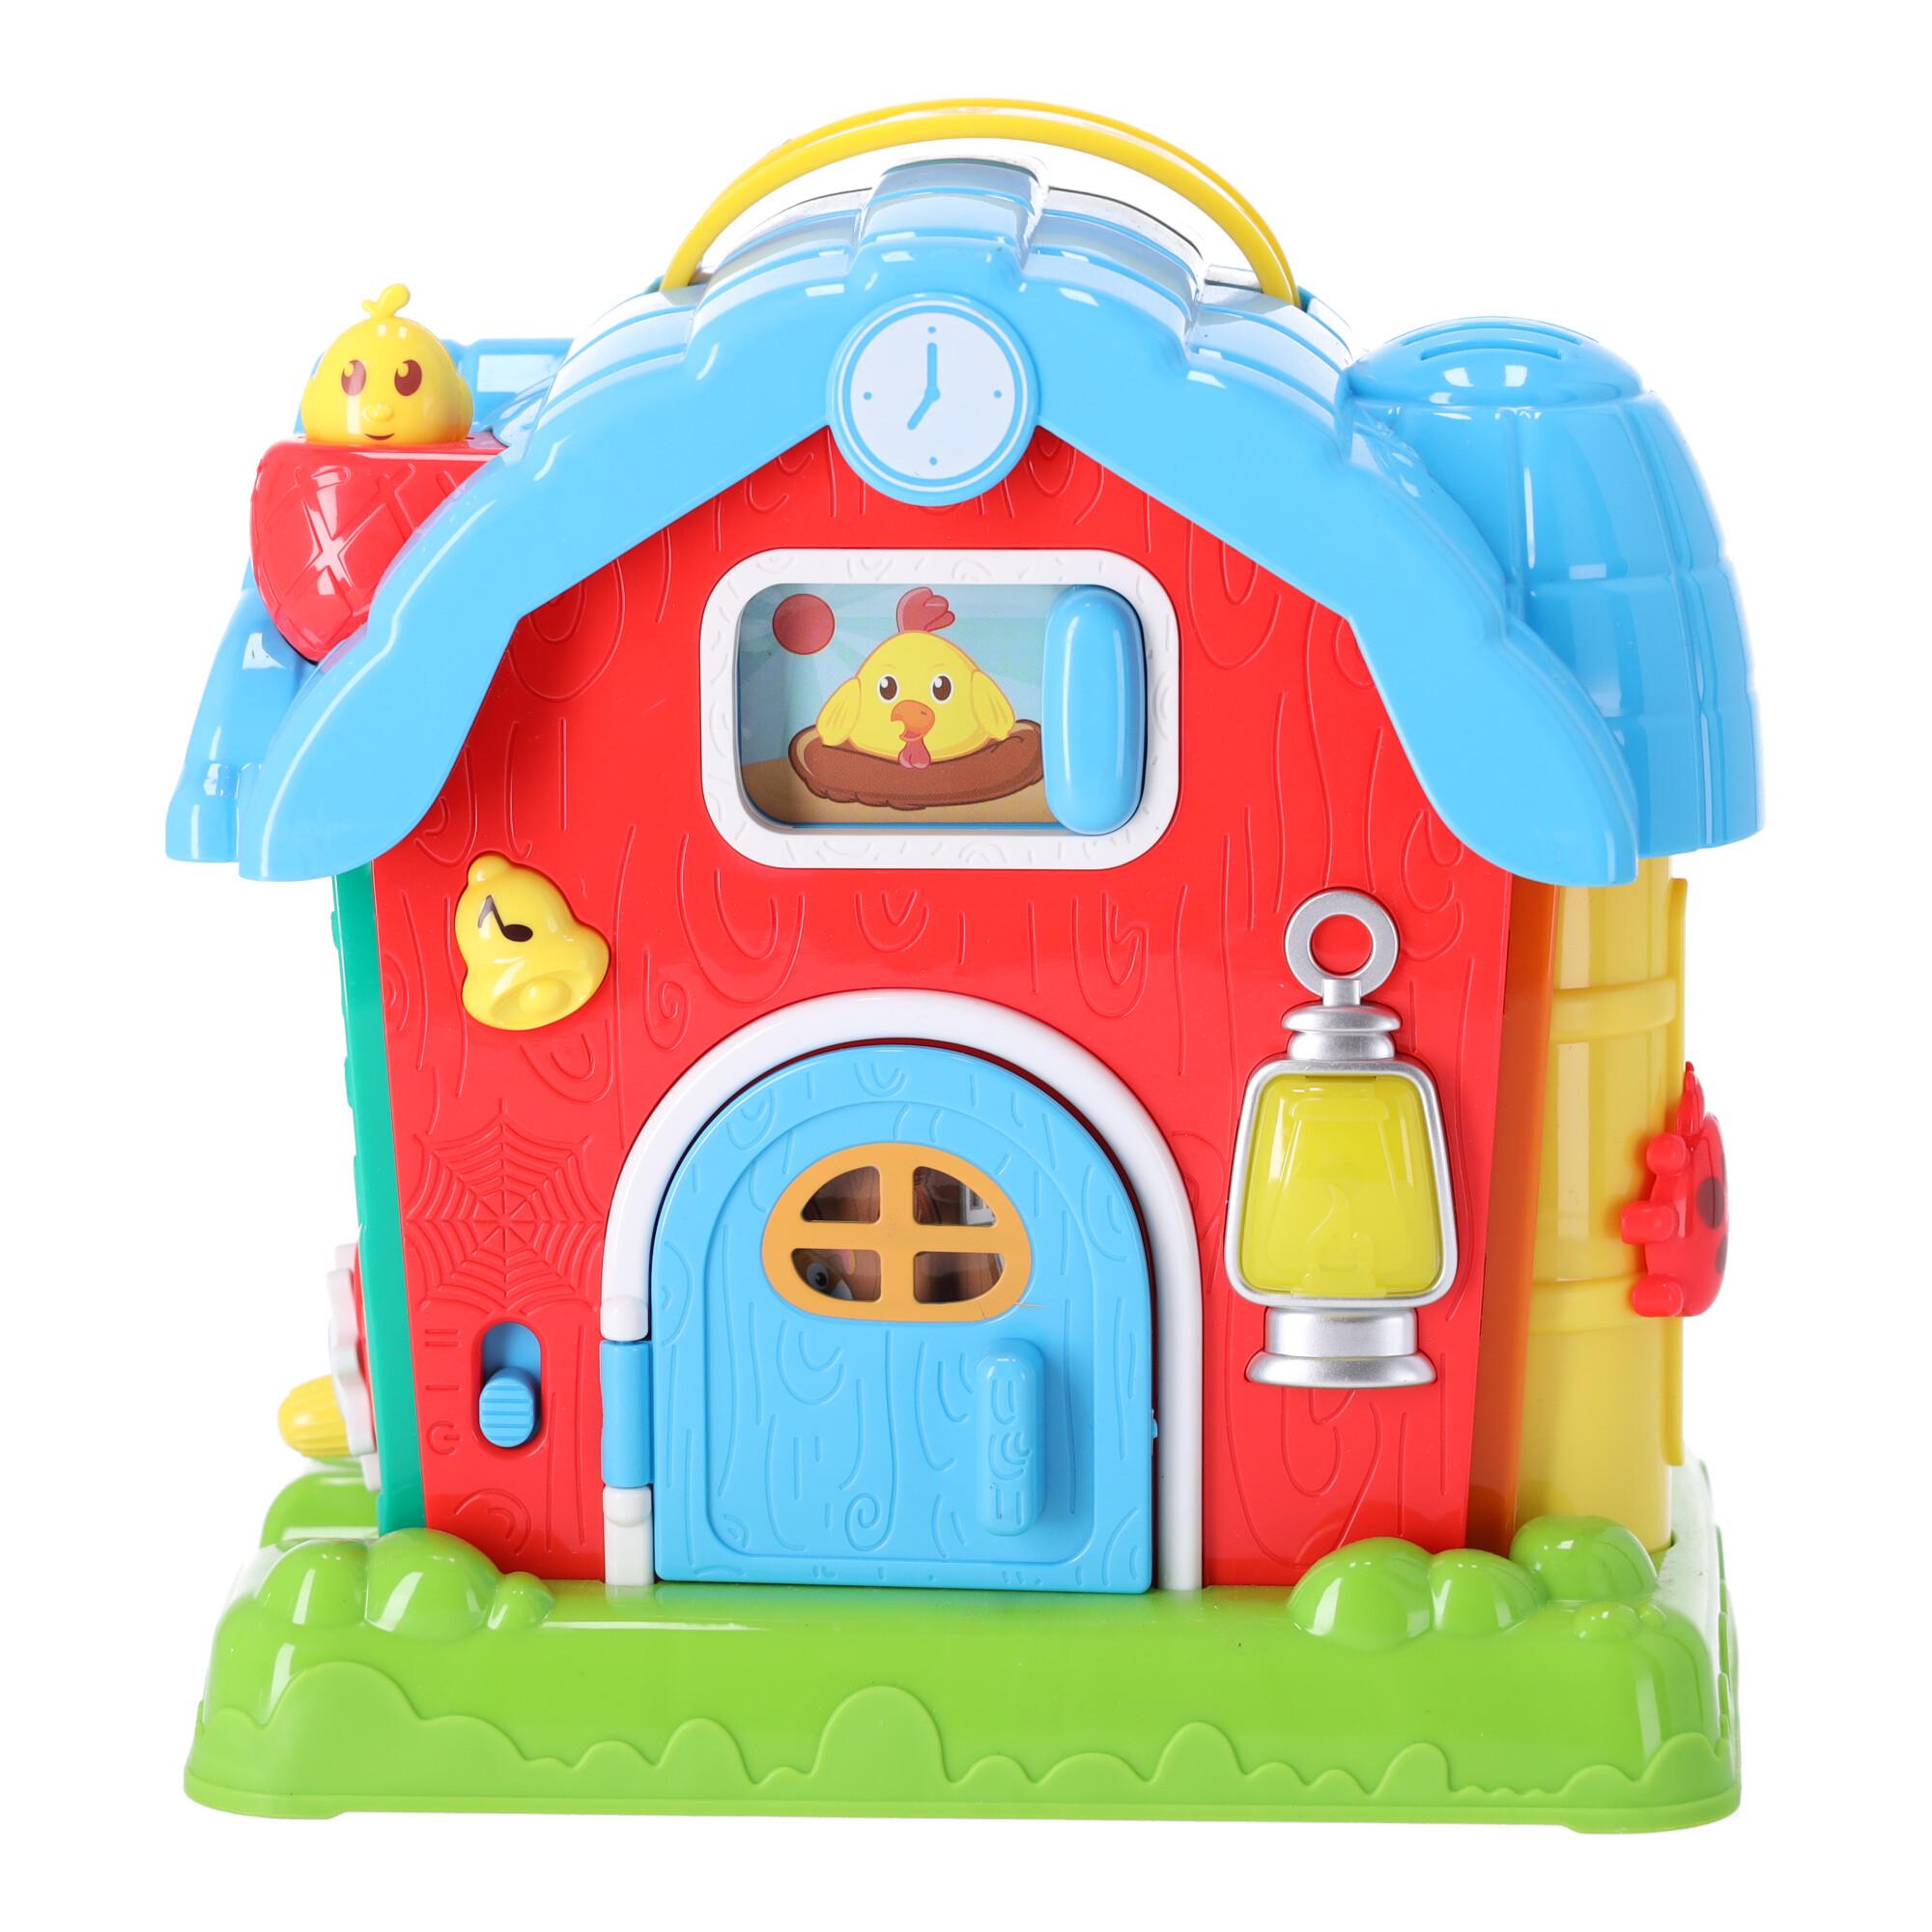 Farmer house set toy-model